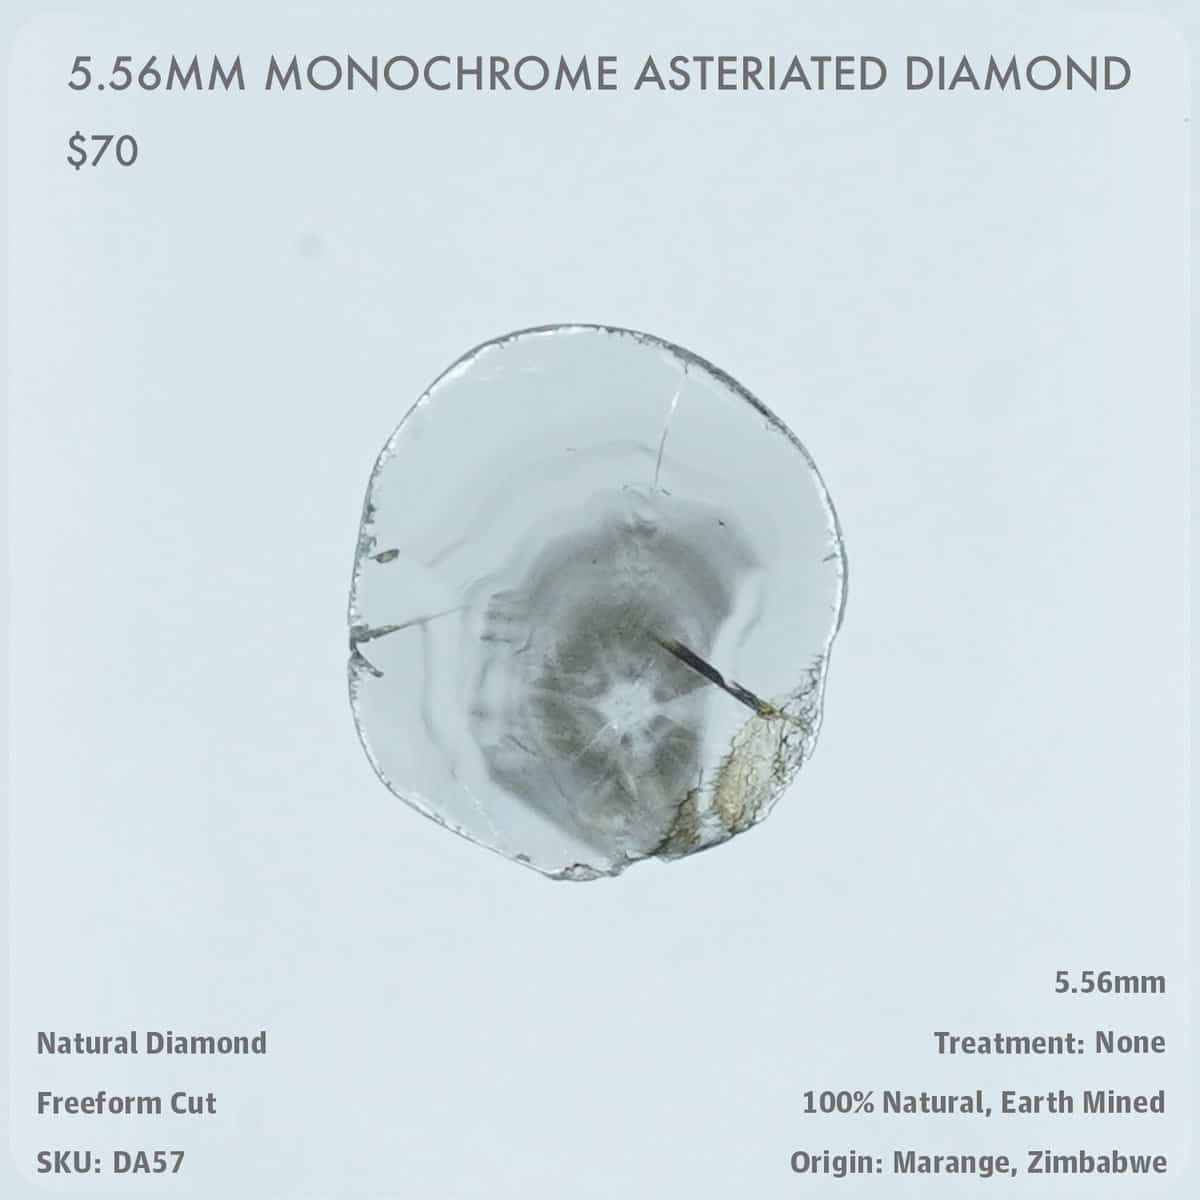 5.56mm Monochrome Asteriated Diamond